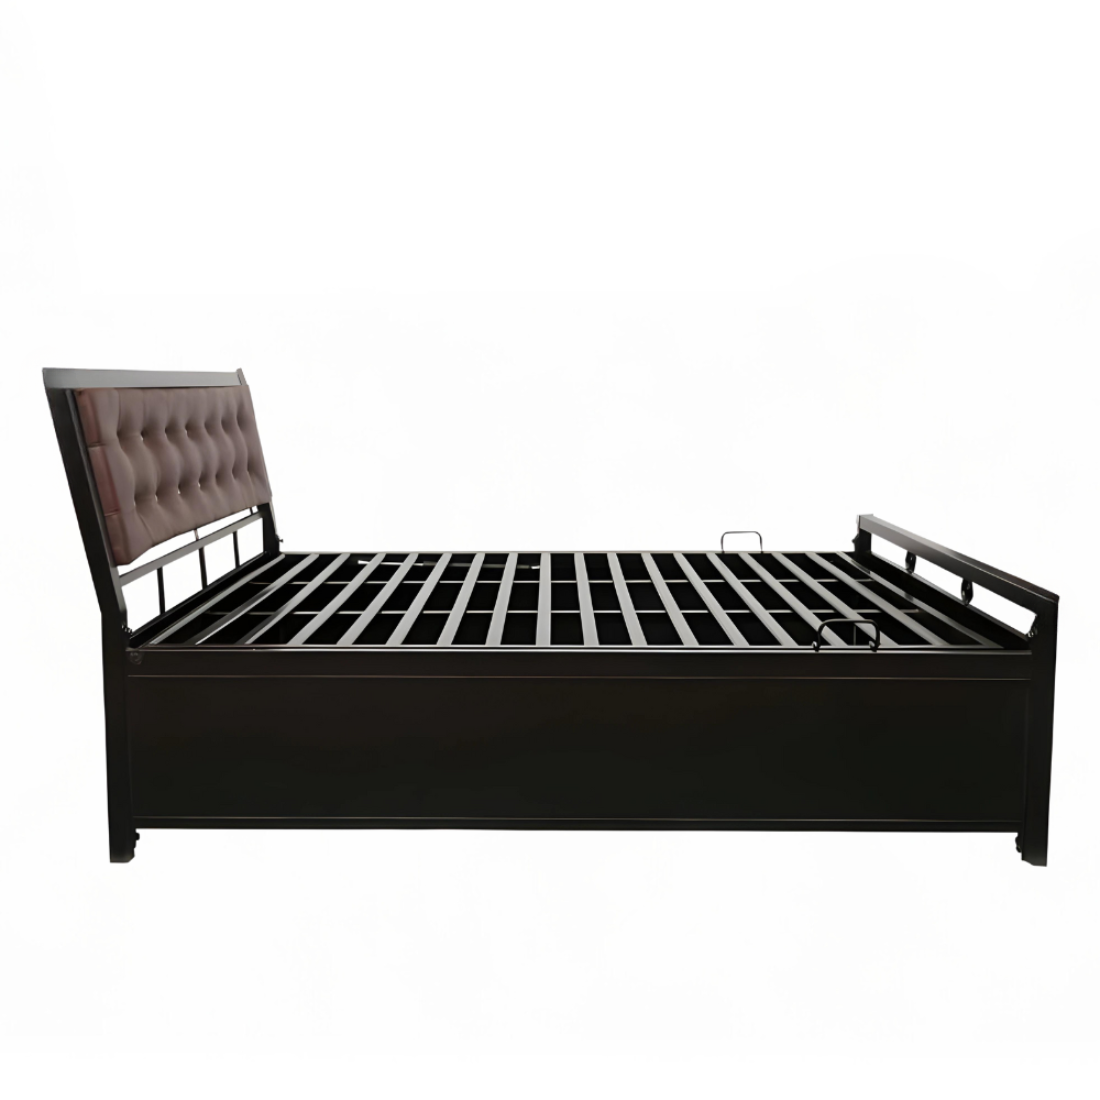 Heath Hydraulic Storage Single Metal Bed with Brown Cushion Headrest (Color - Black)